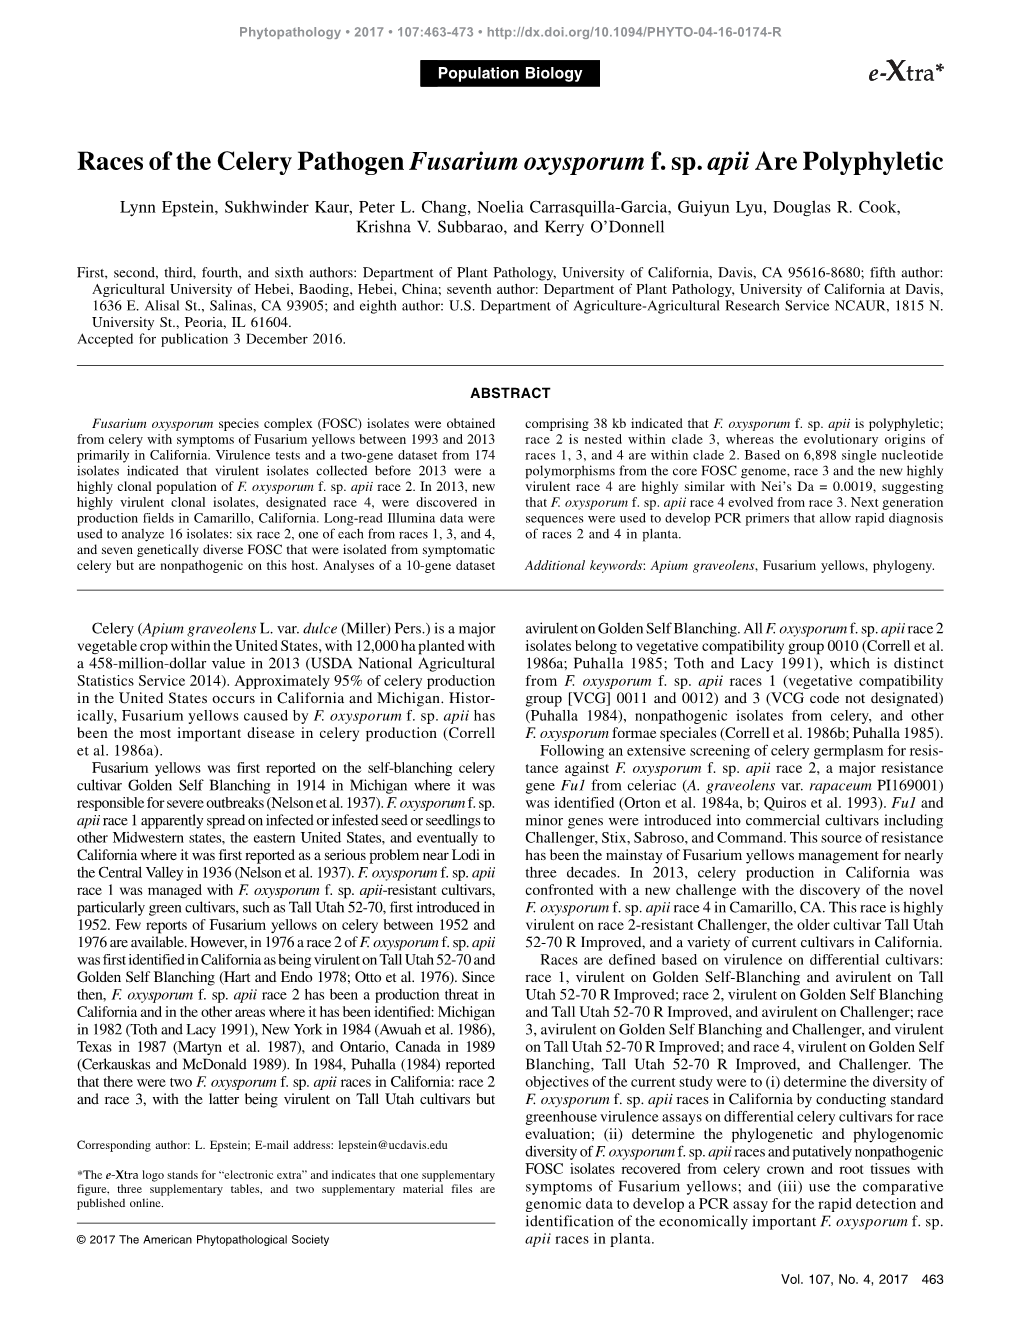 Races of the Celery Pathogen Fusarium Oxysporum F. Sp. Apii Are Polyphyletic